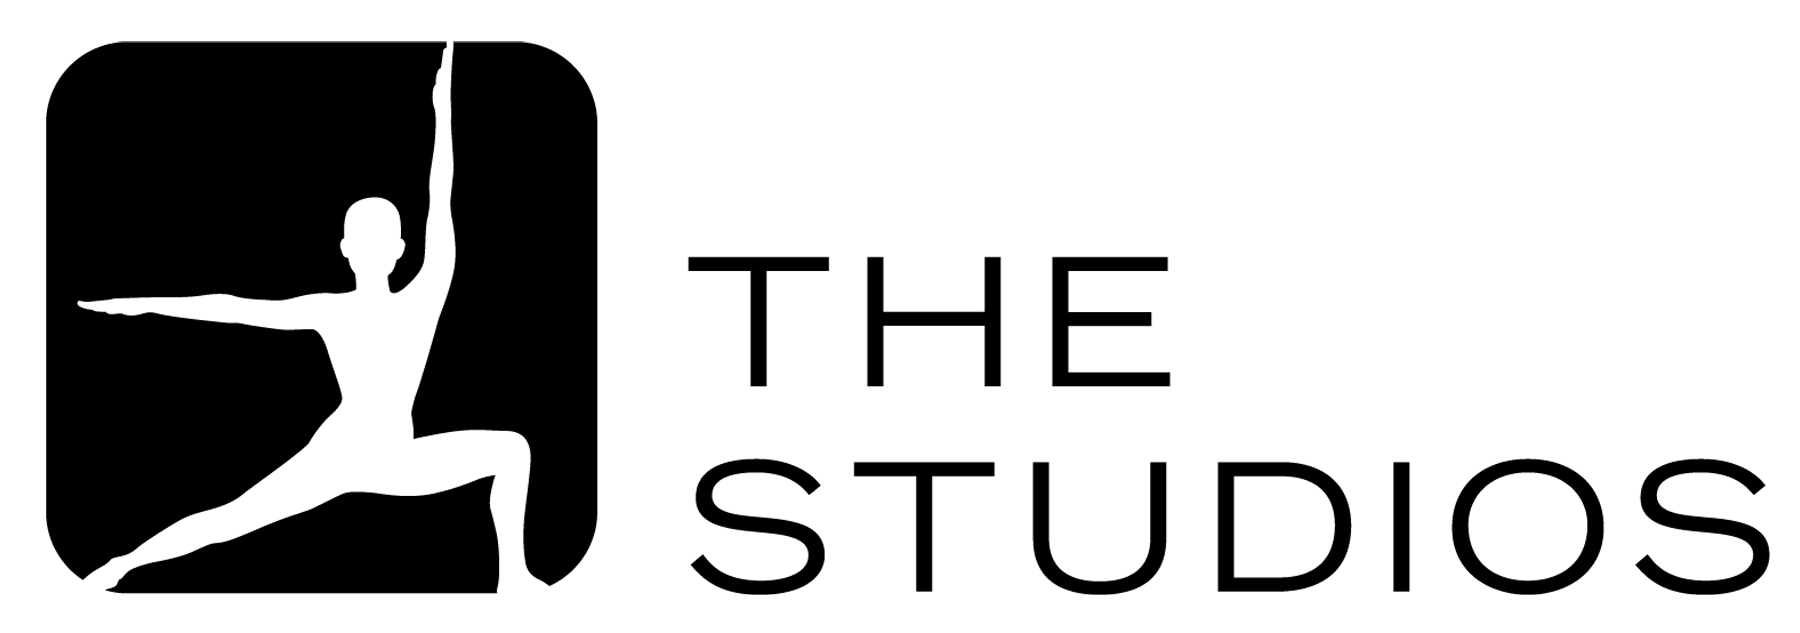 srudios logo black